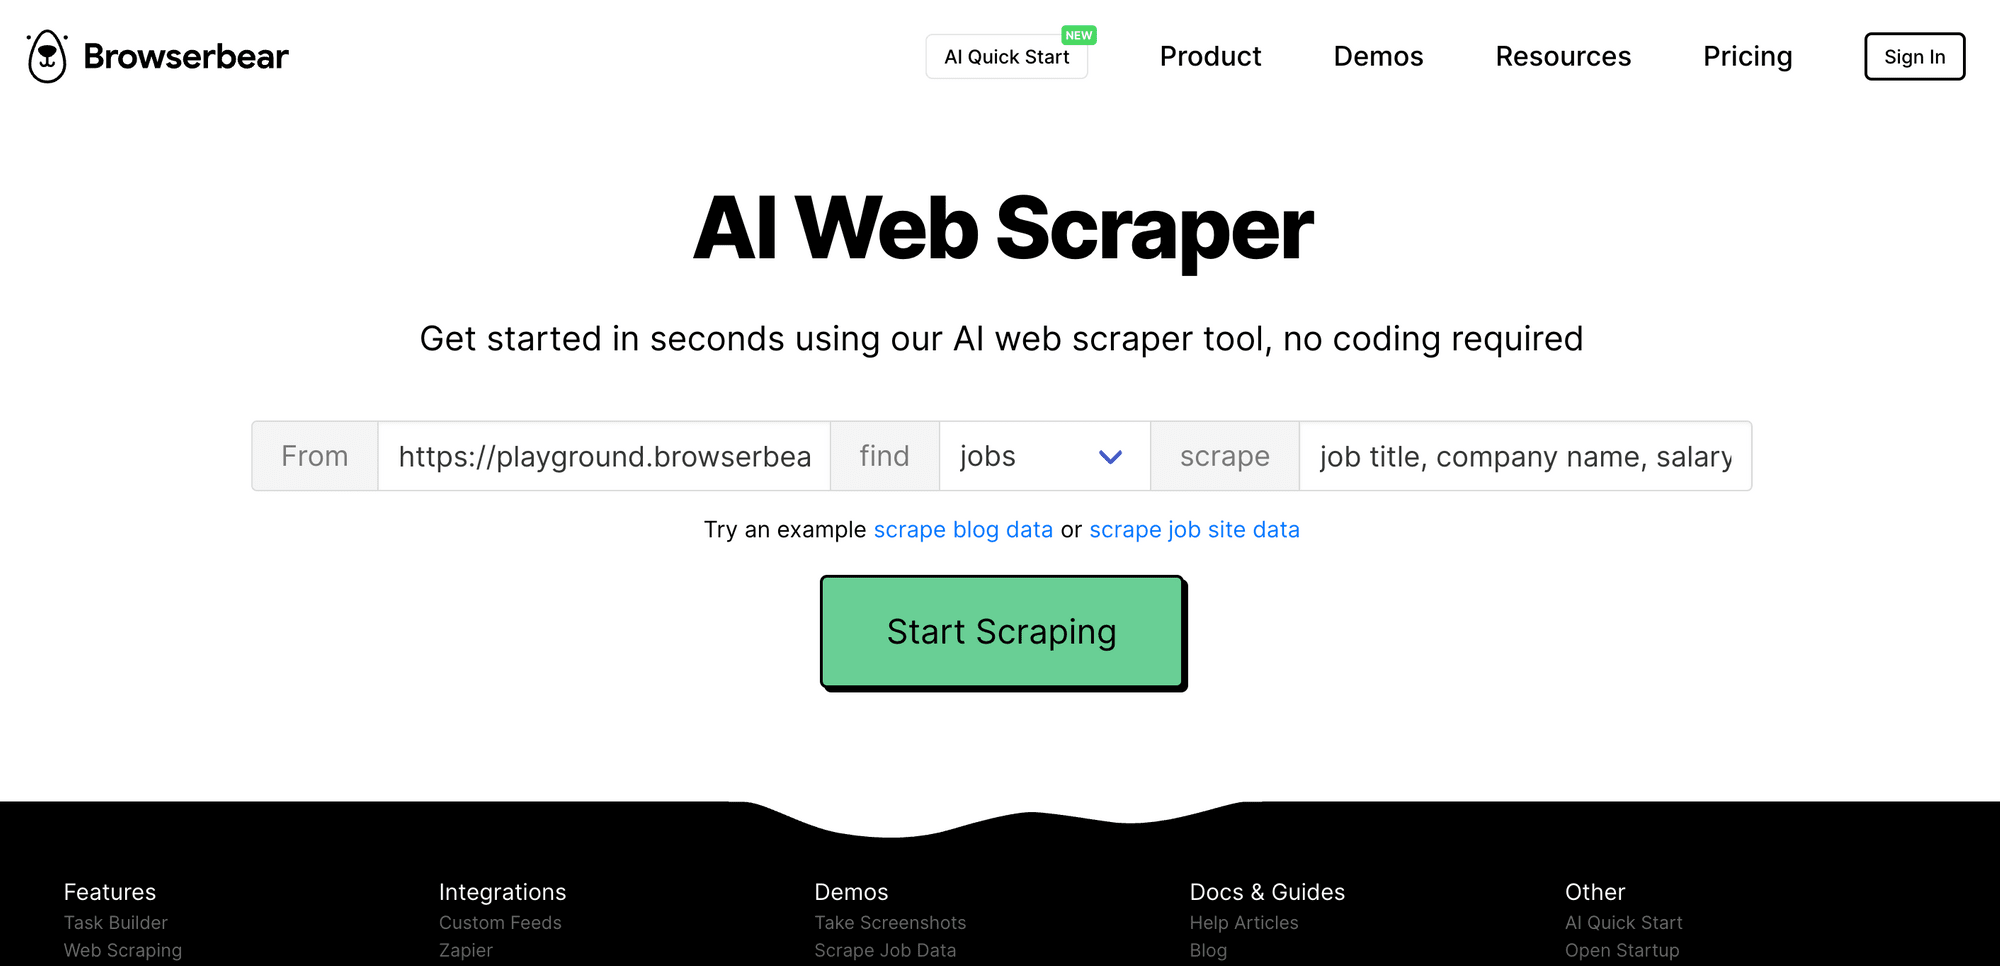 Browserbear AI Web Scraper.png